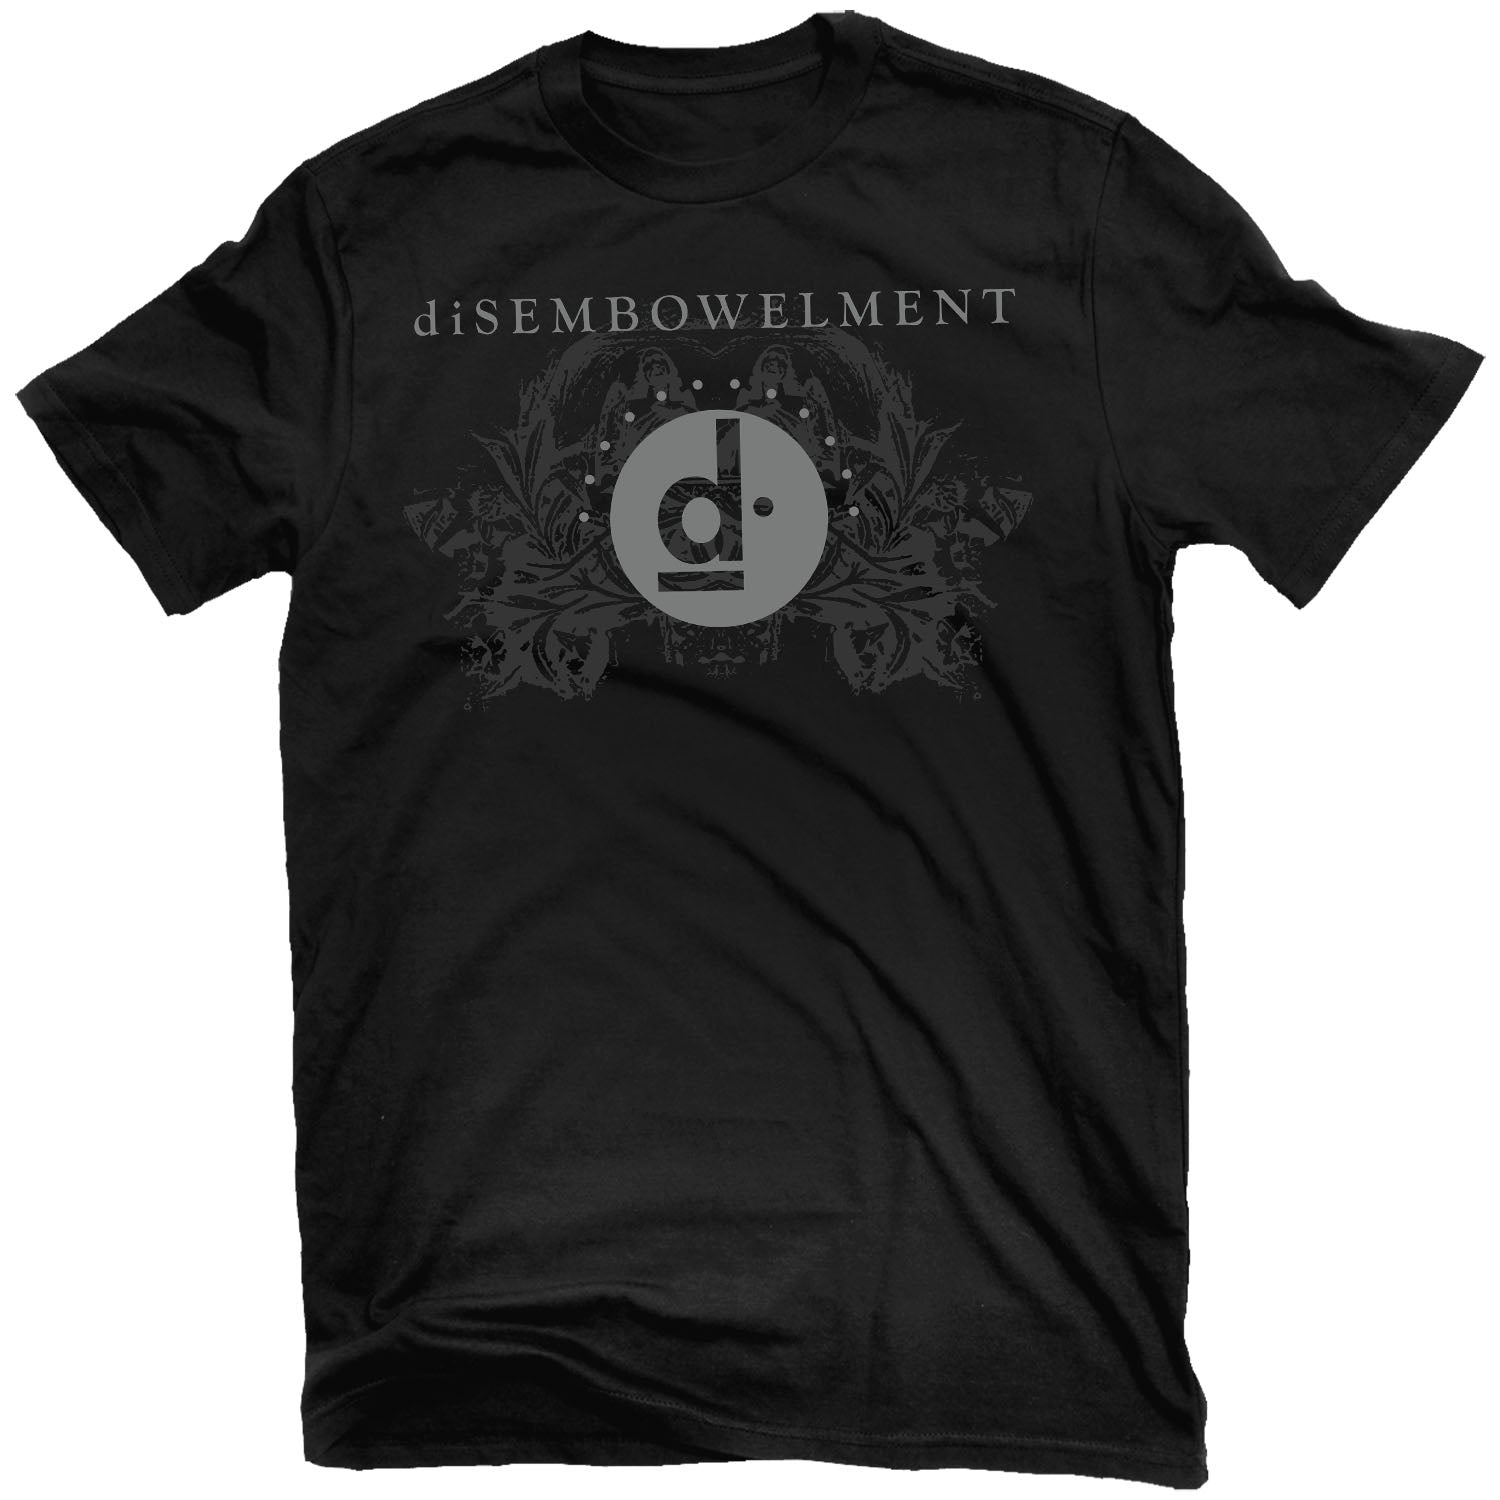 Disembowelment "Transcend" T-Shirt